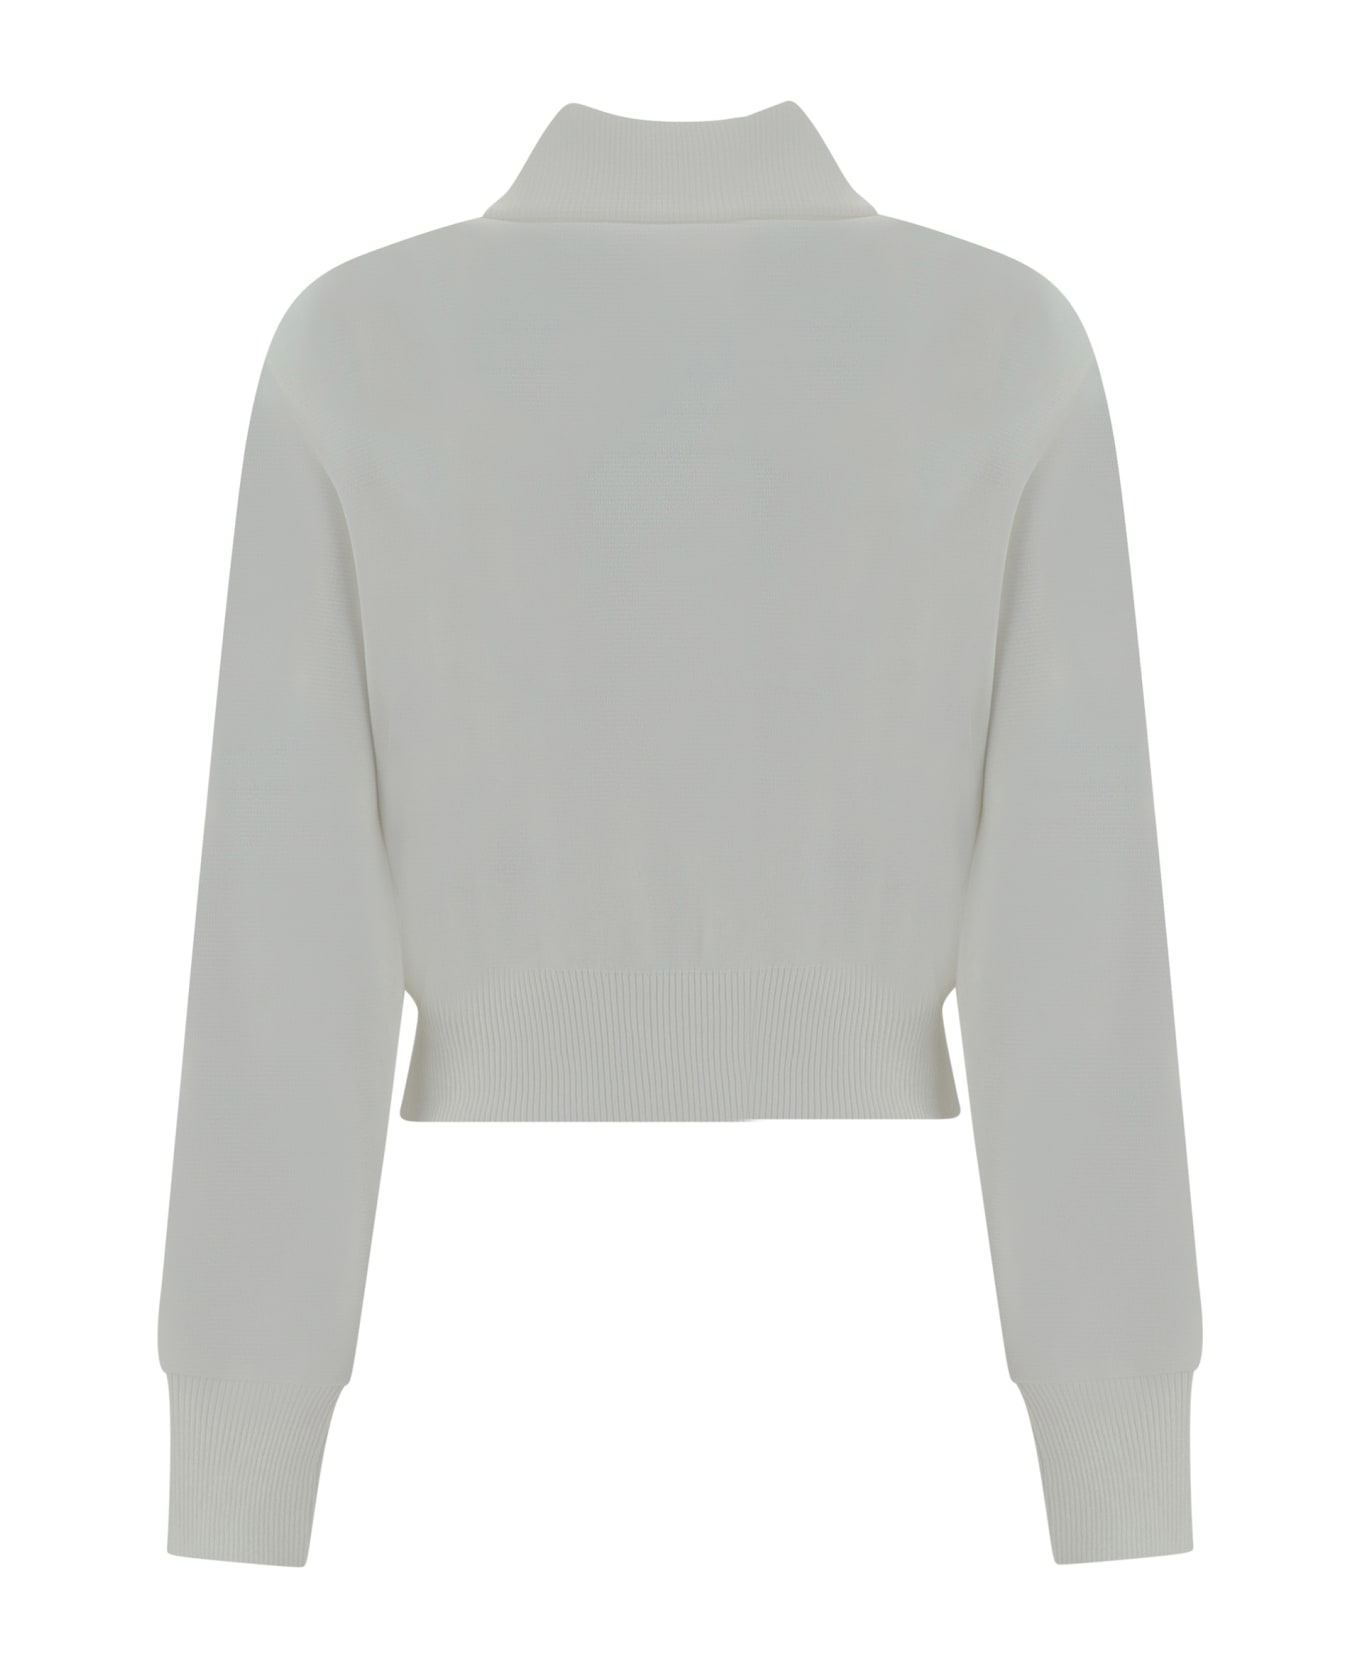 Autry Zipper Sweatshirt - White ジャケット